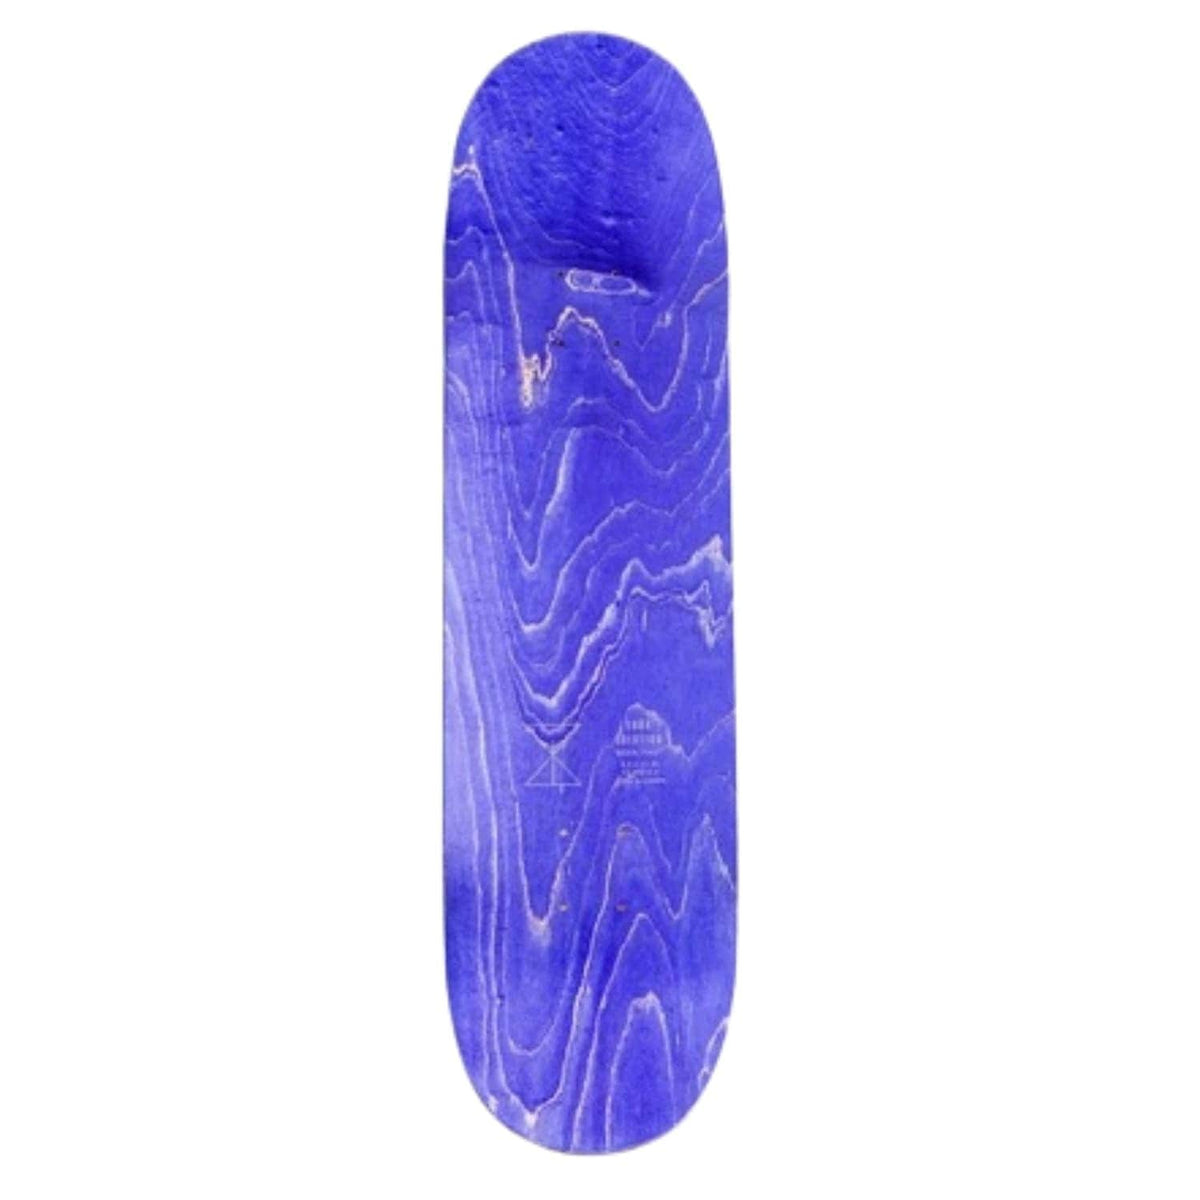 Sour Josef Piss Skateboard Deck - Multi